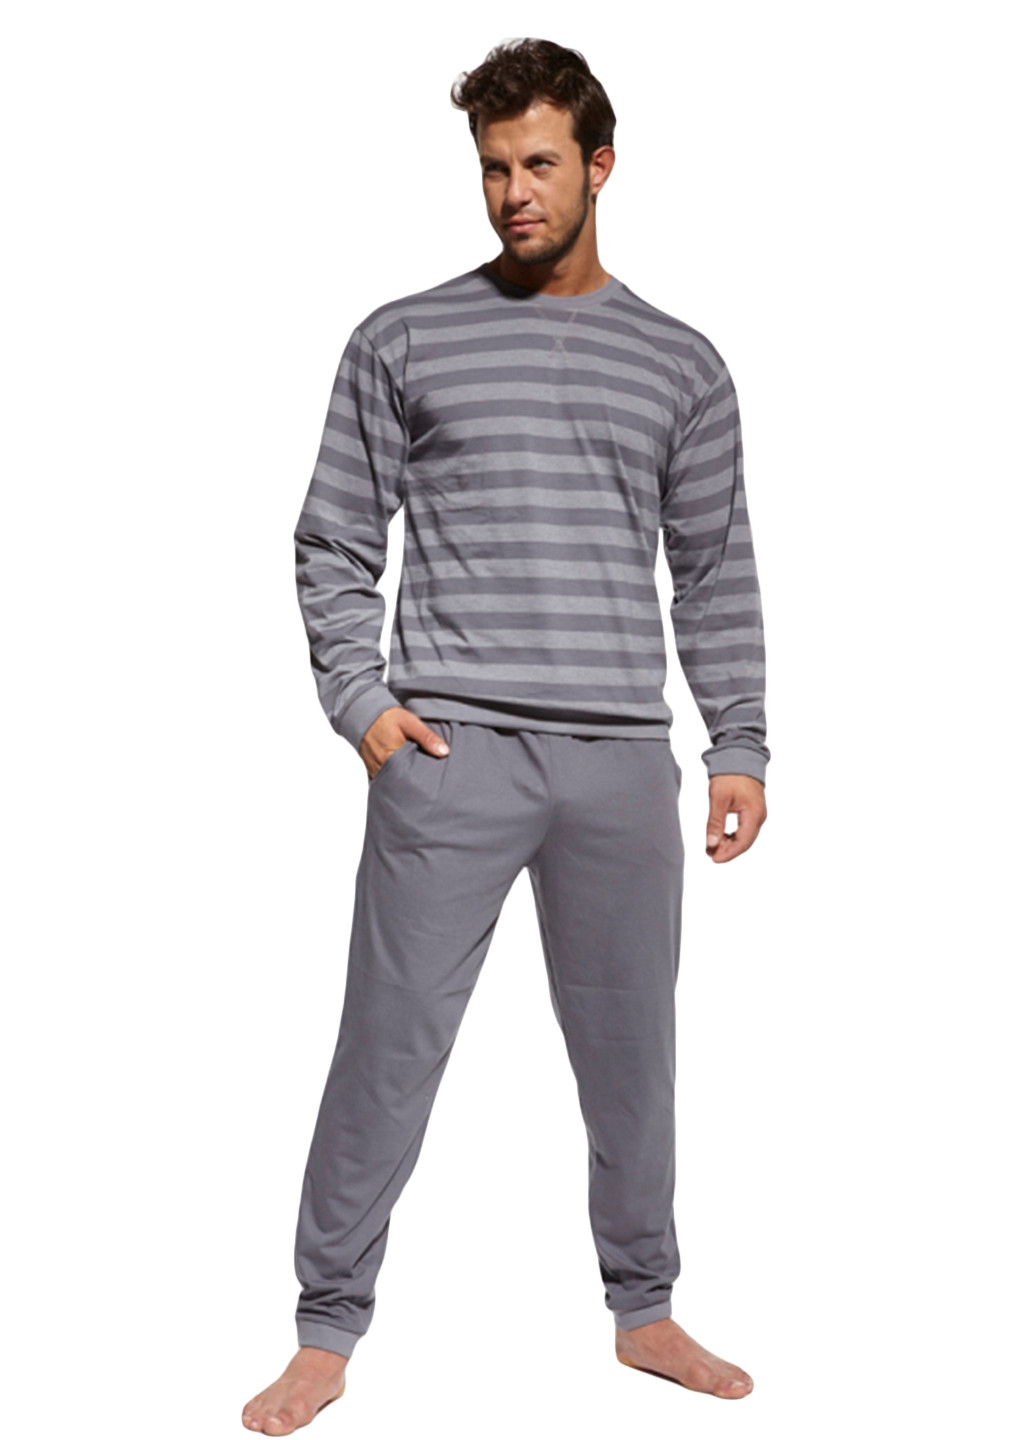 Піжама (футболка, штани) Cornette футболка + штани смужка графітова домашня бавовна